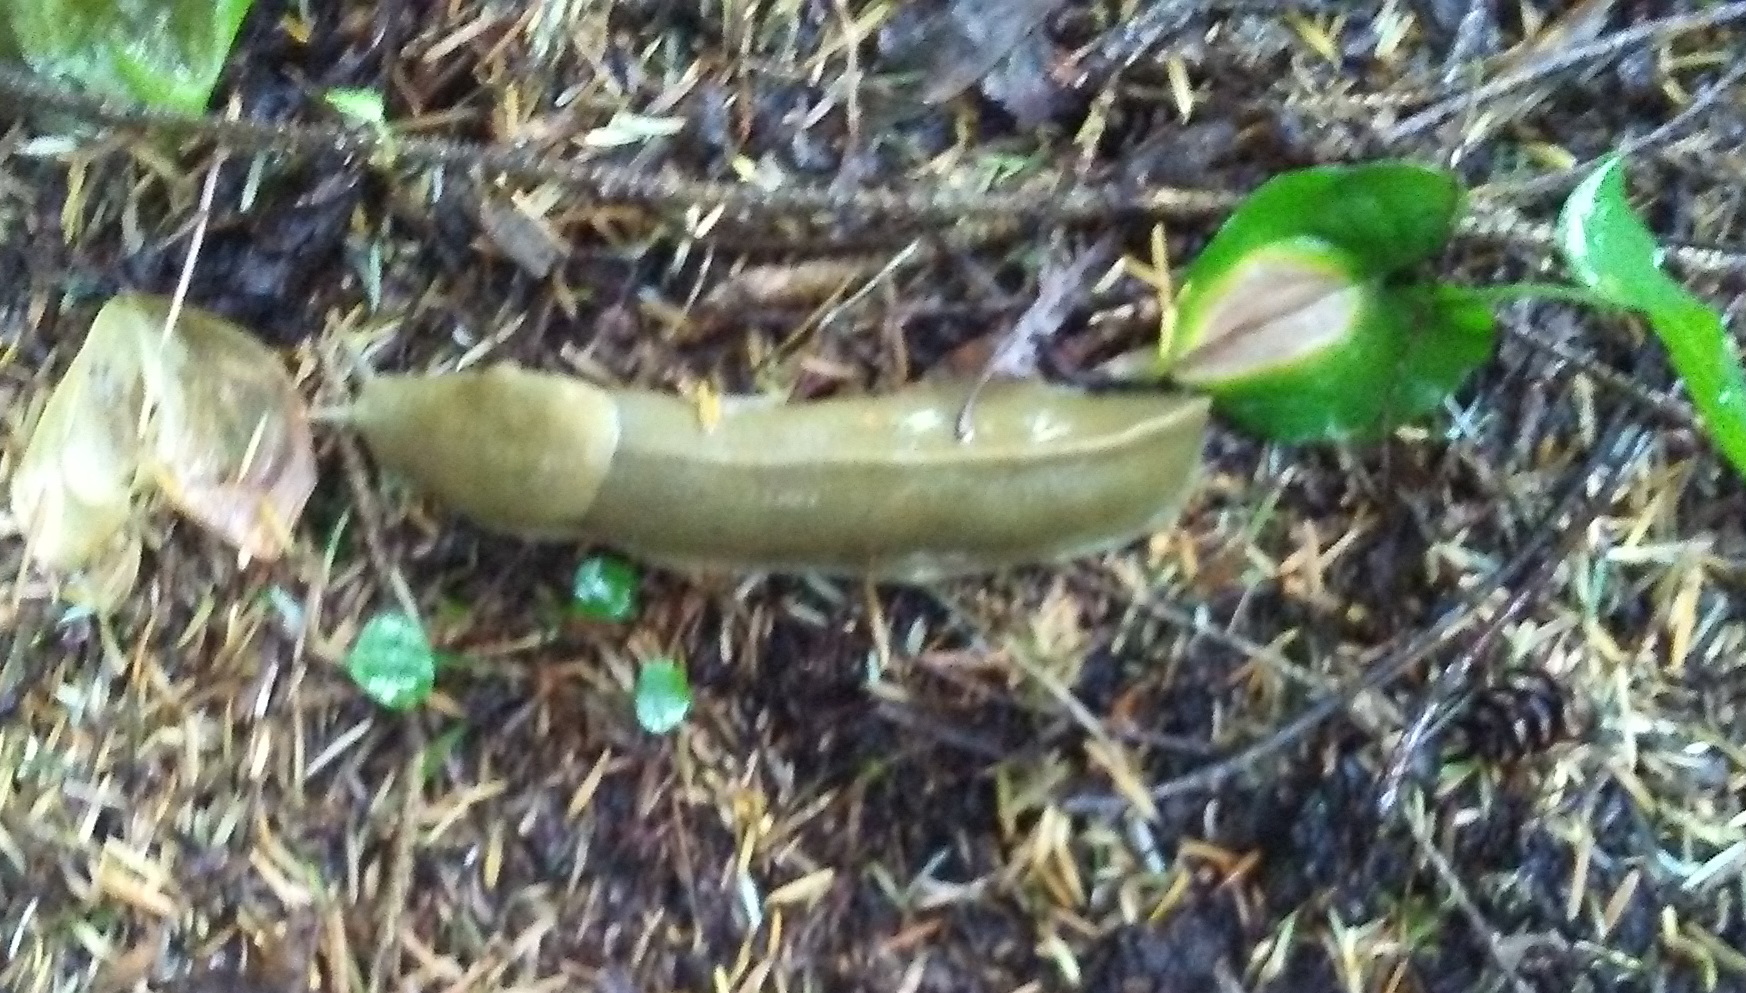 an image of a large yellowish-brown slug on dirt and twigs